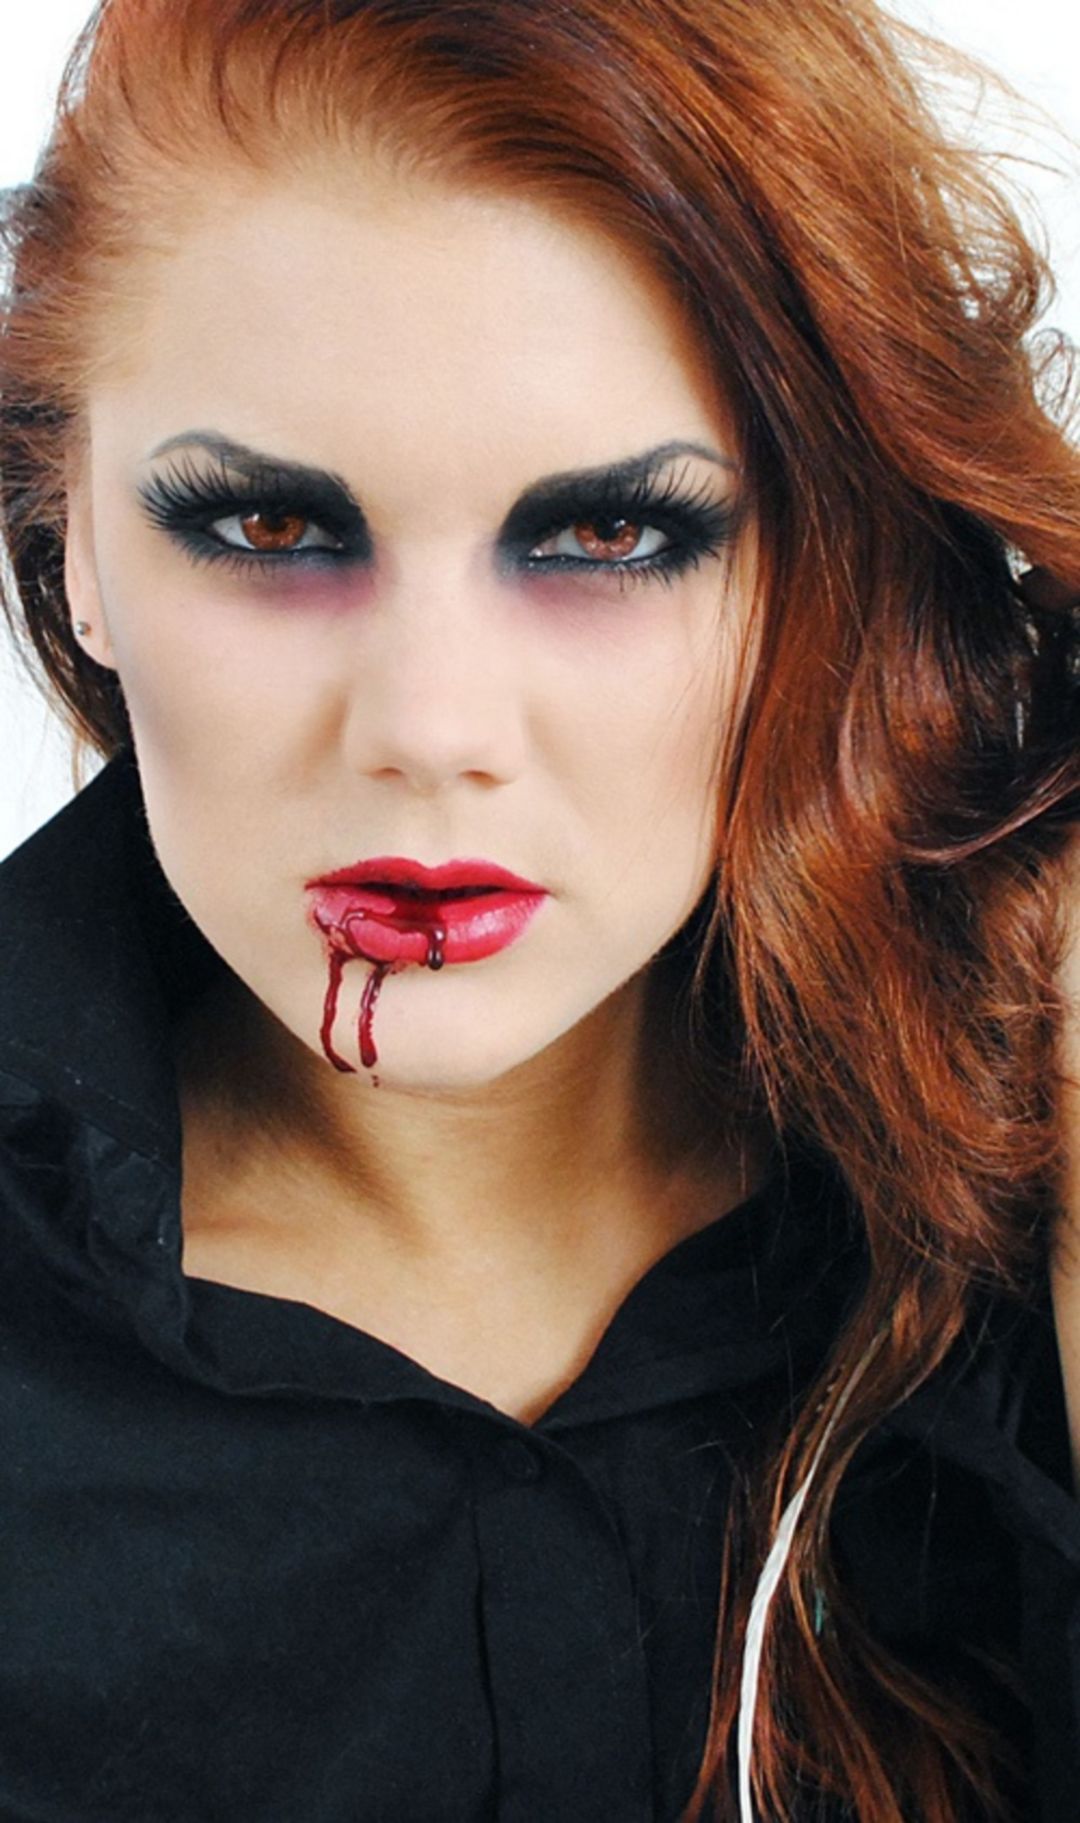 Макияж вампирши на хэллоуин | | prod make up